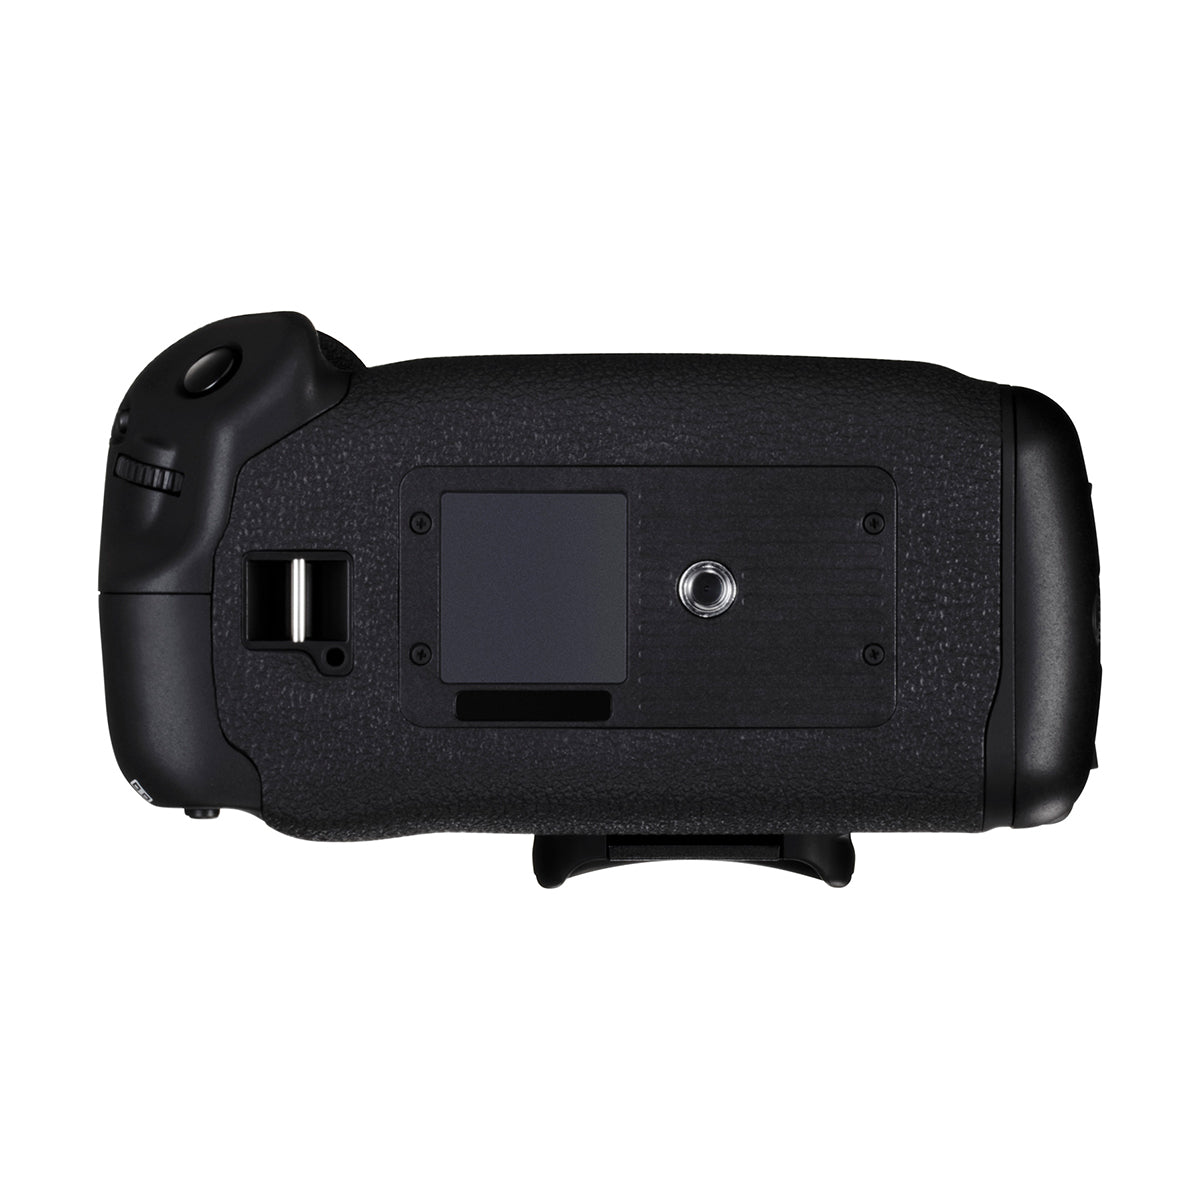 Canon EOS-1DX Mark III Digital Camera Body CFexpress Card & Reader Bundle Kit